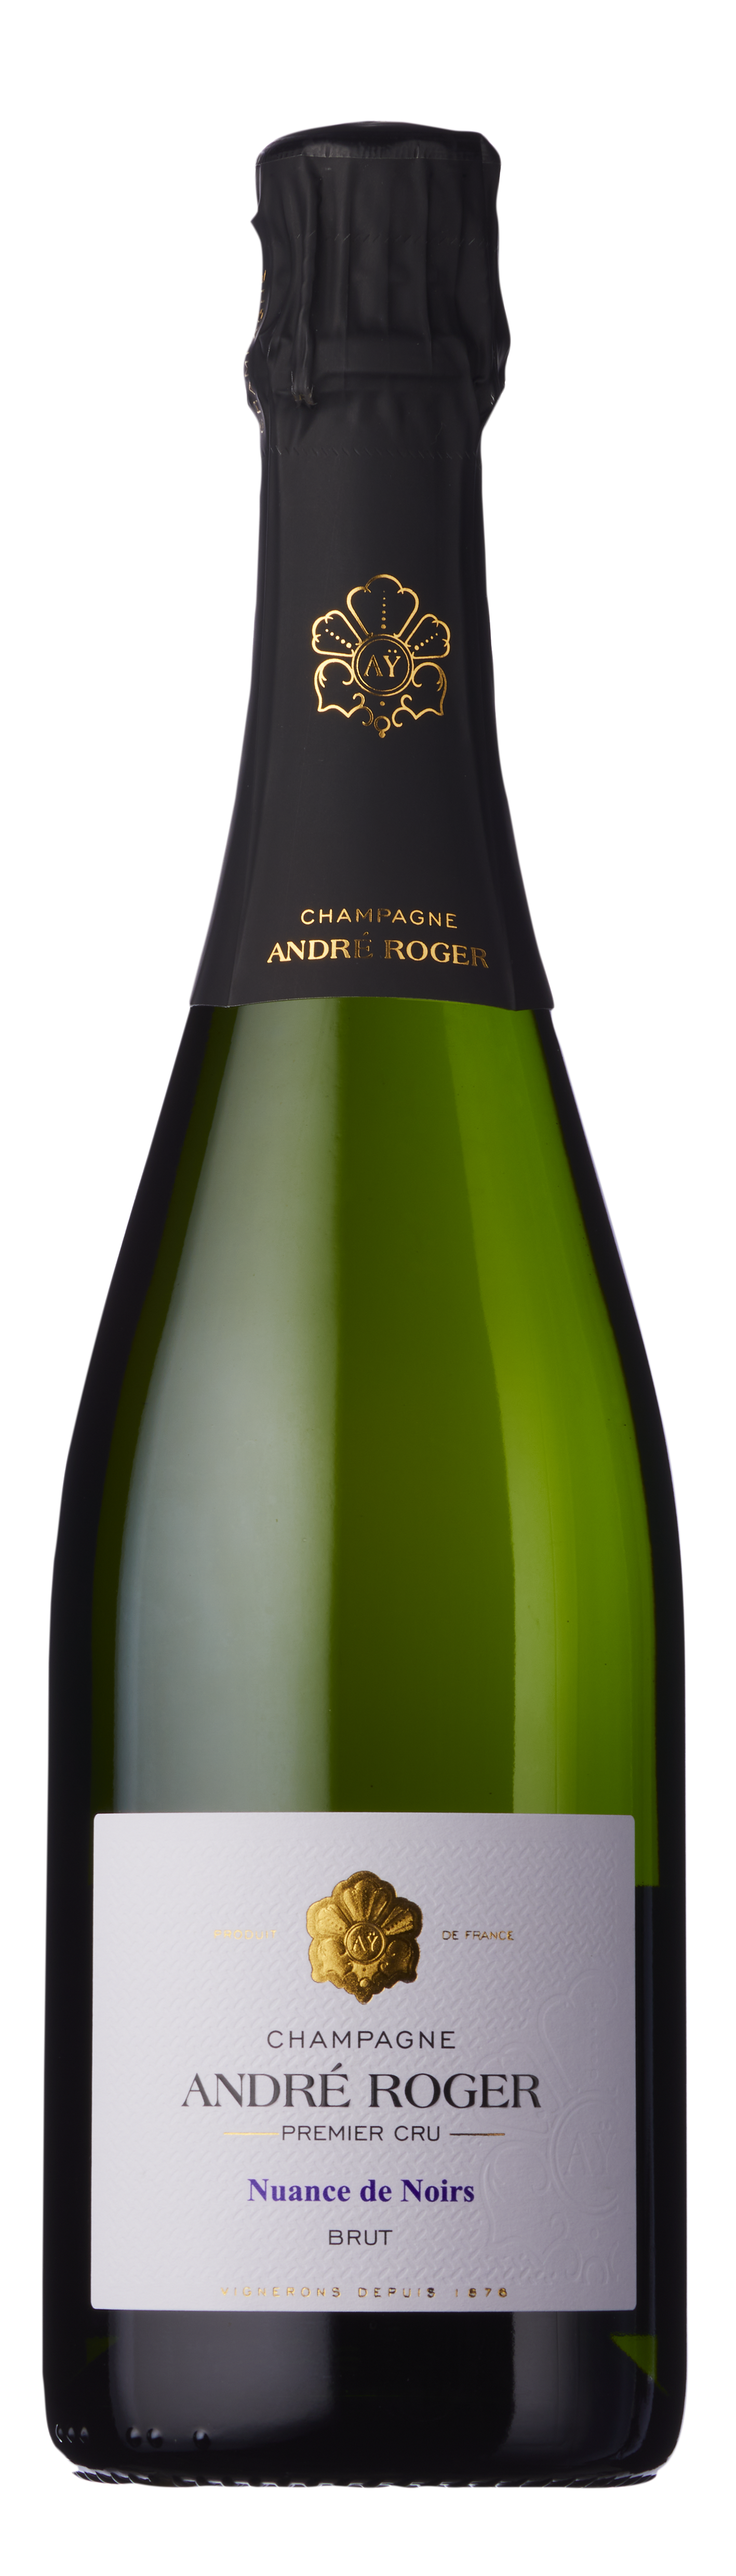 Bottle shot - Champagne André Roger, Nuance de Noirs Brut Premier Cru, Aÿ, Champagne, France